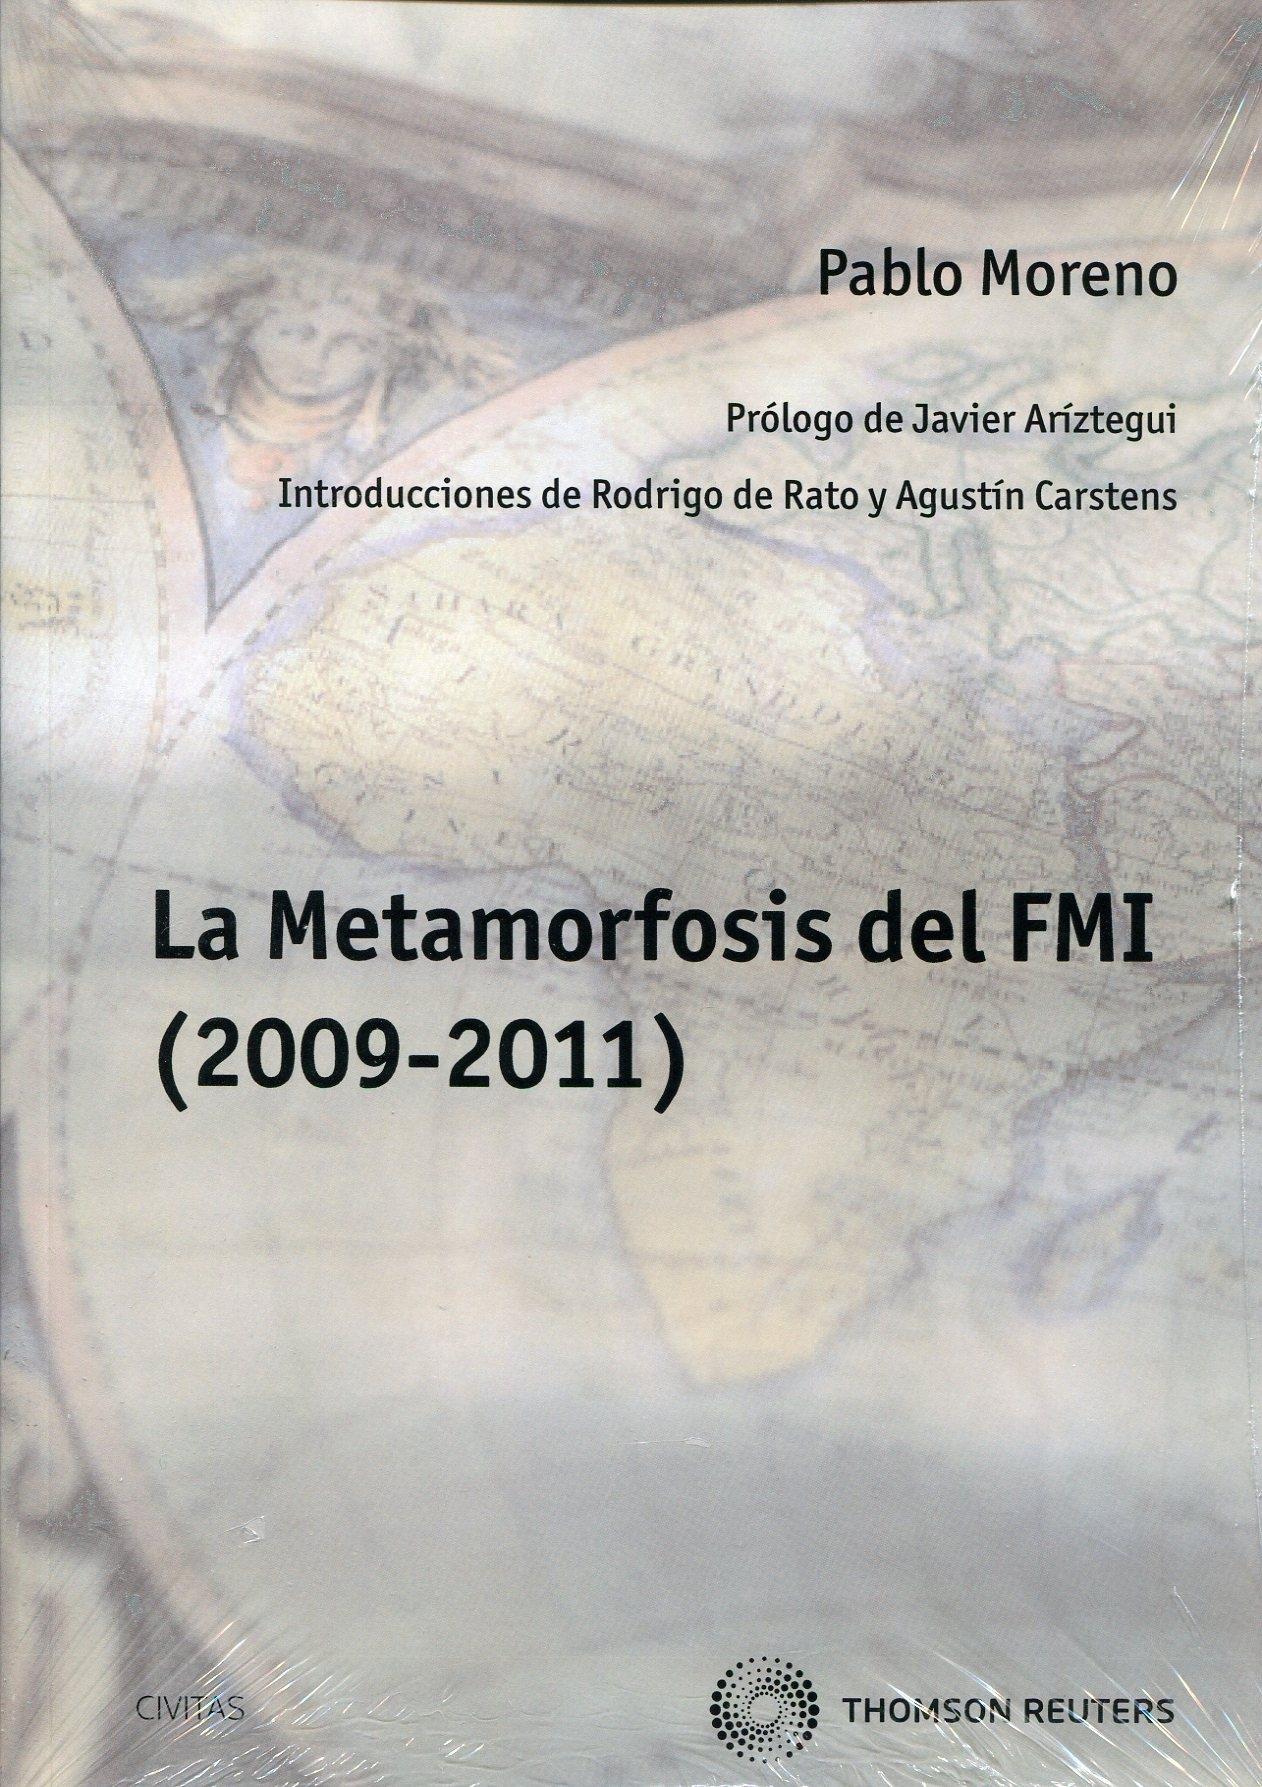 La metamorfosis del FMI (2009-2011)